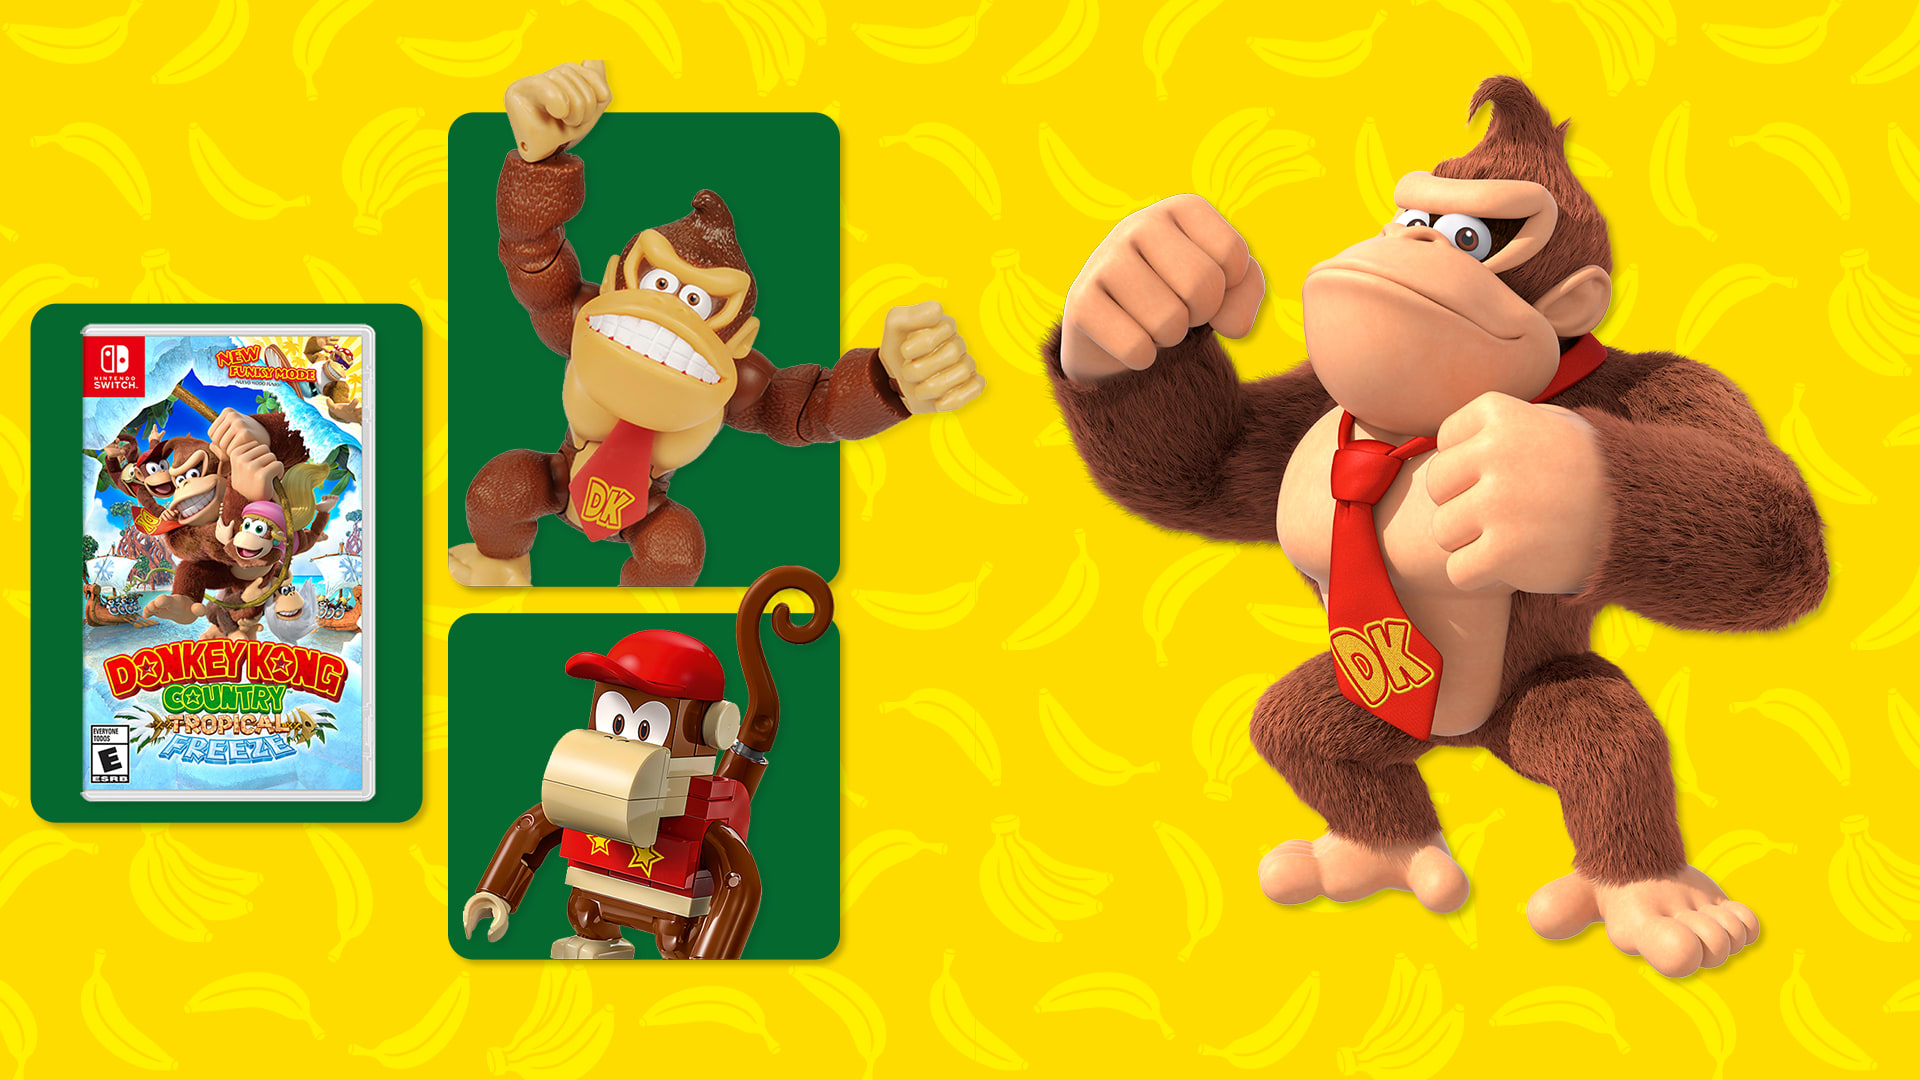 Donkey Kong posing with DK merch